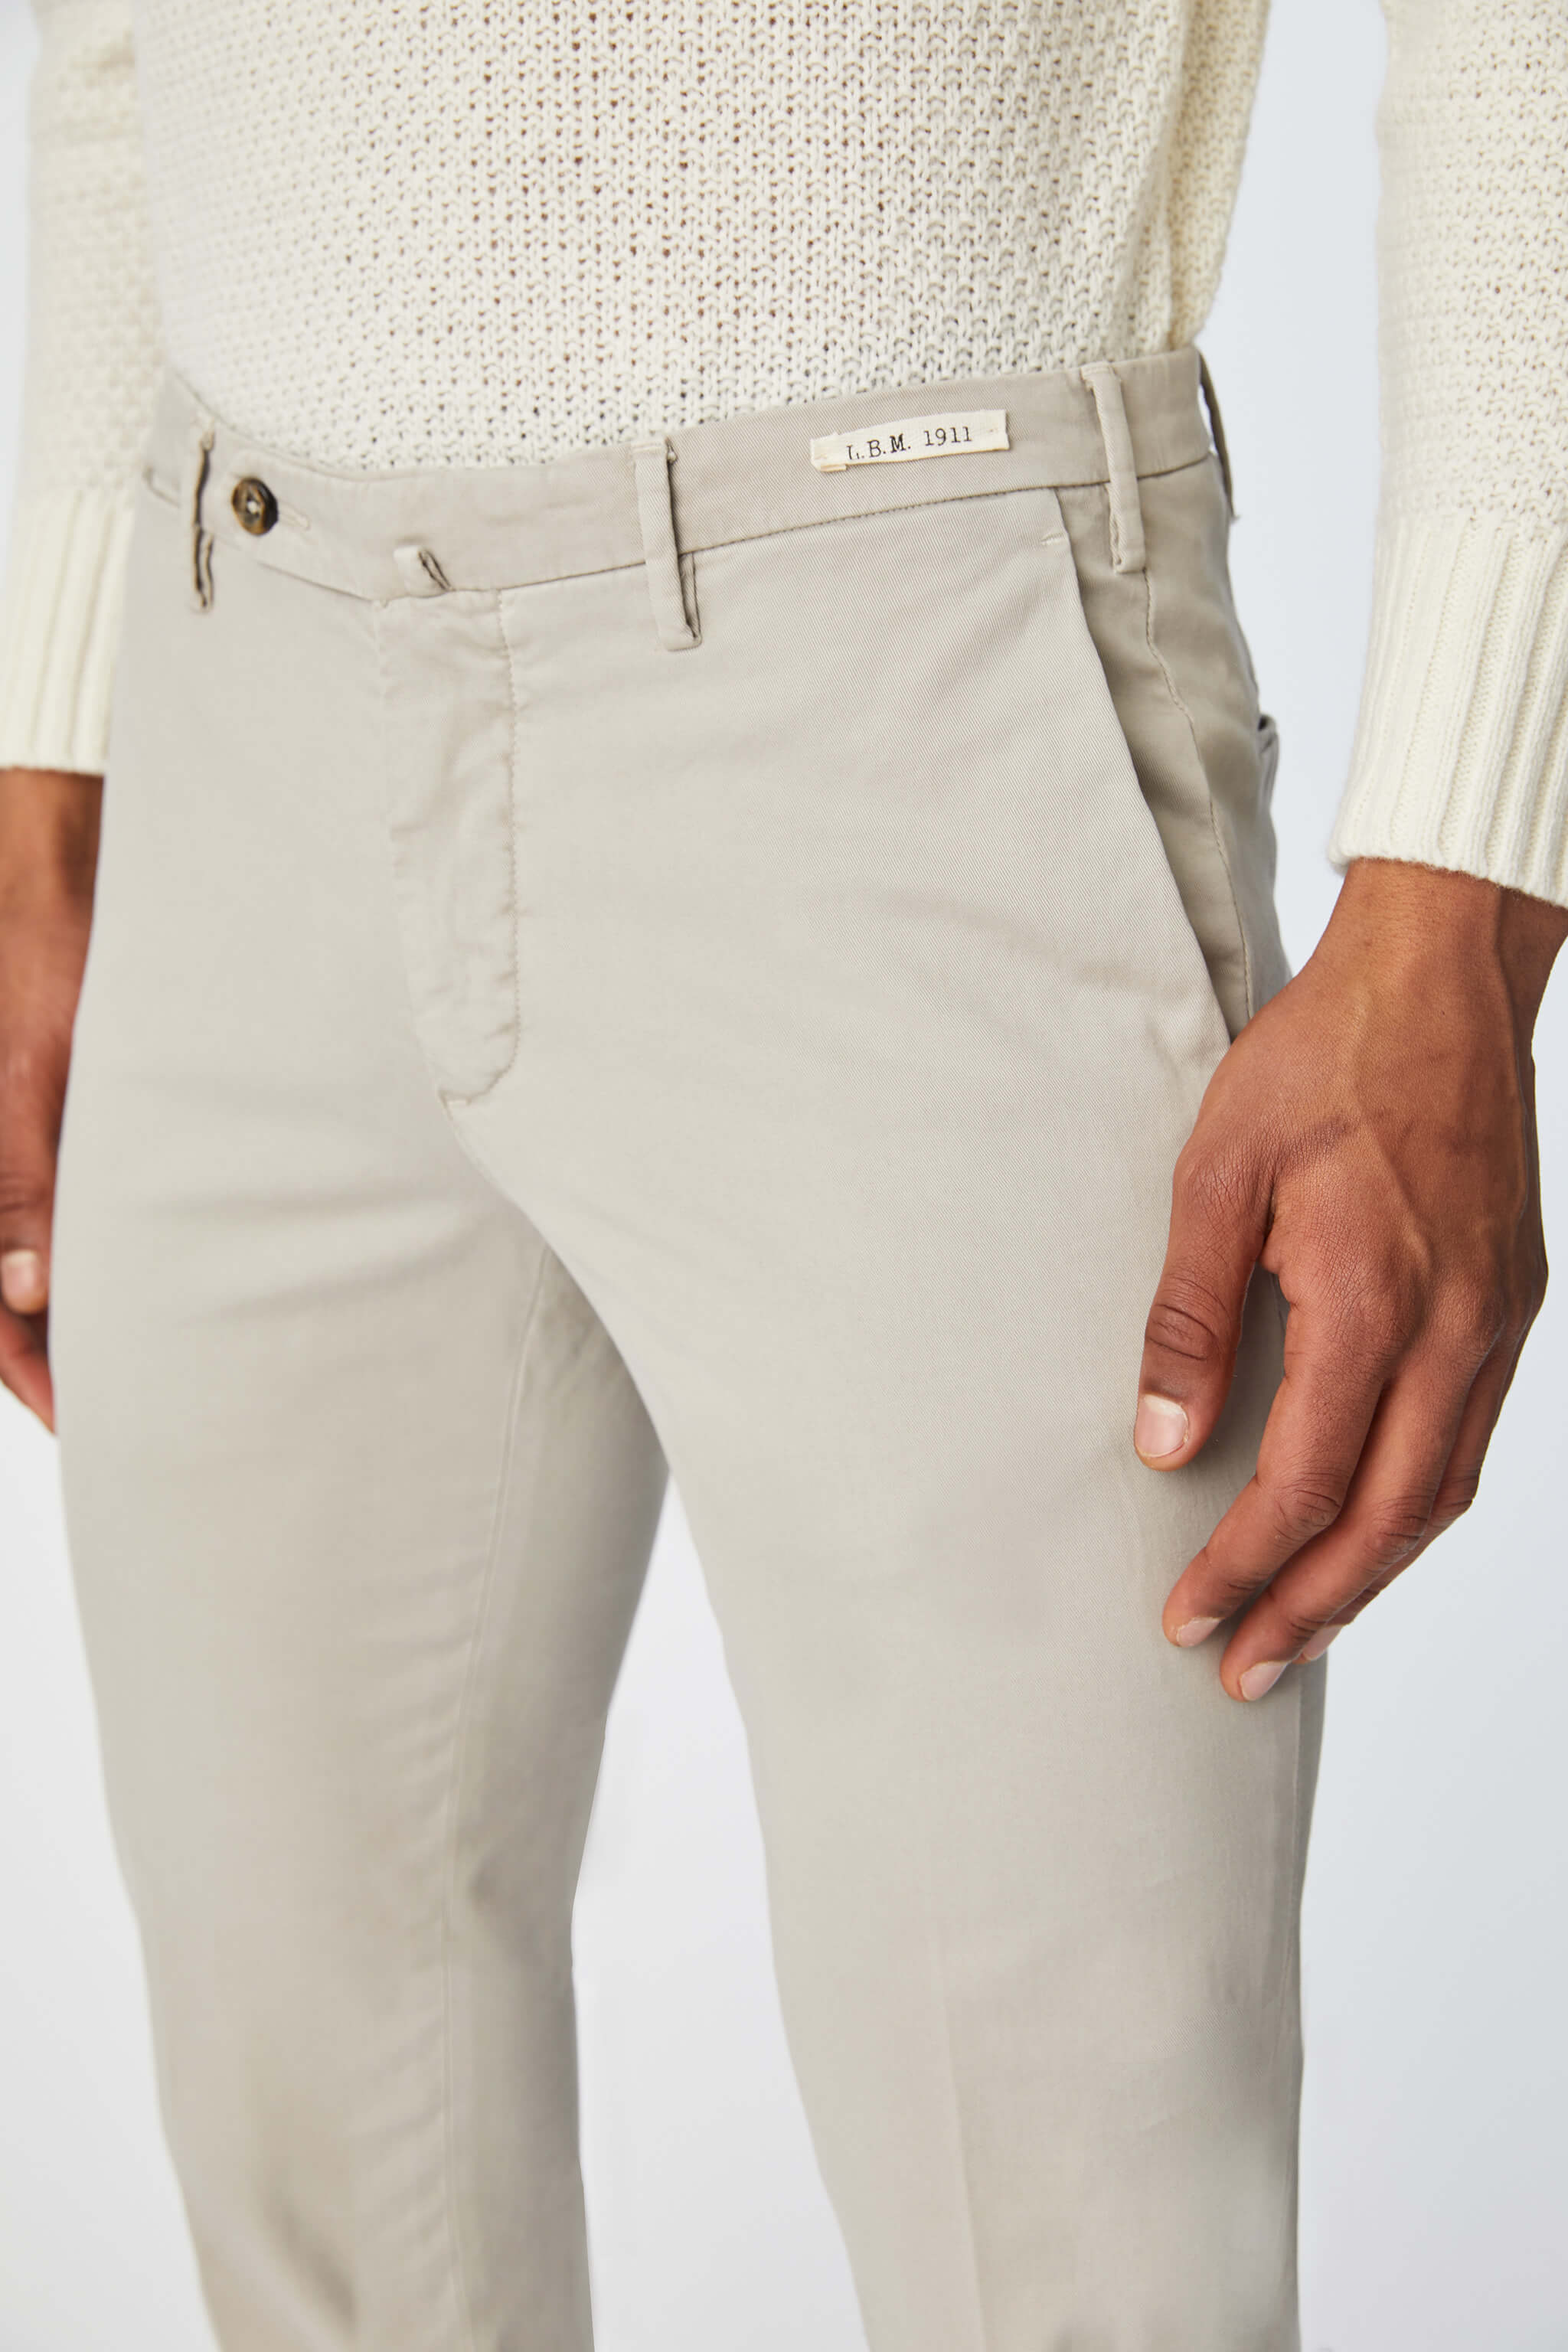 Garment-dyed FREDDIE pants in ice gray